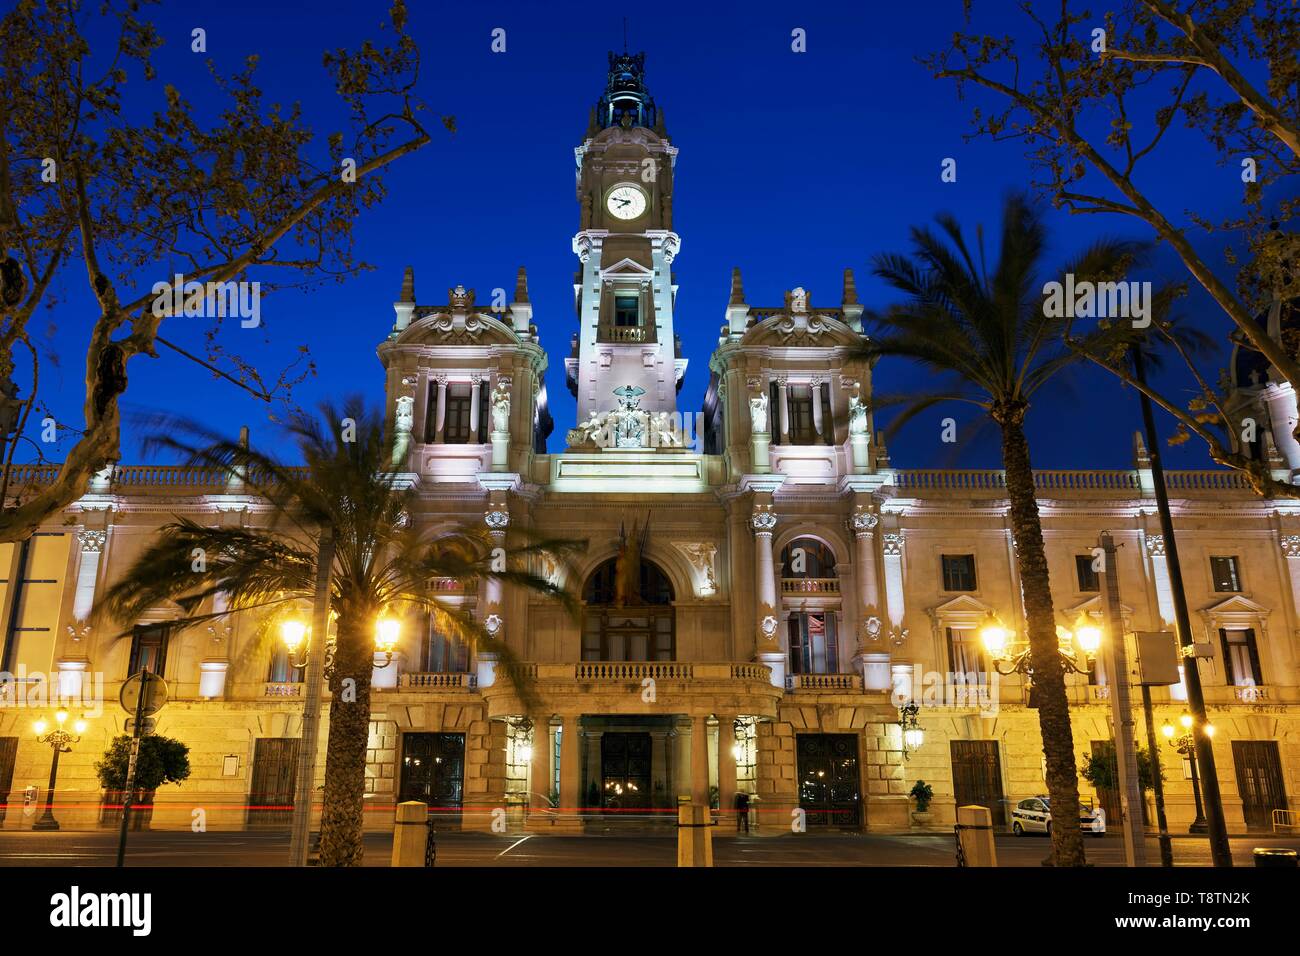 City Hall, Ajuntament, night, illuminated, eclectic architectural style, Valencia, Spain Stock Photo